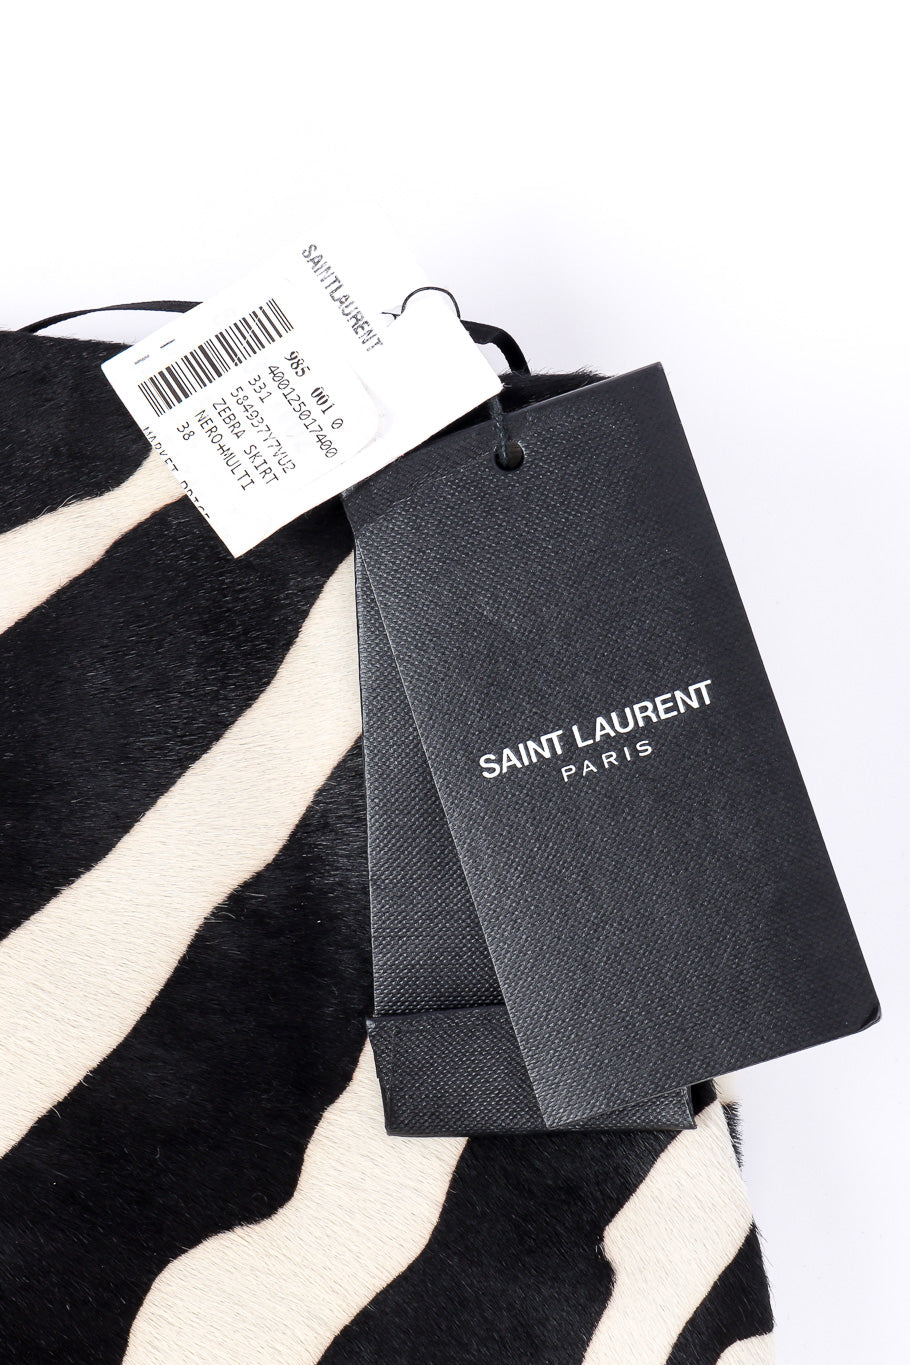 Saint Laurent 2019 F/W Zebra Print Midi Skirt original tags closeup @Recessla